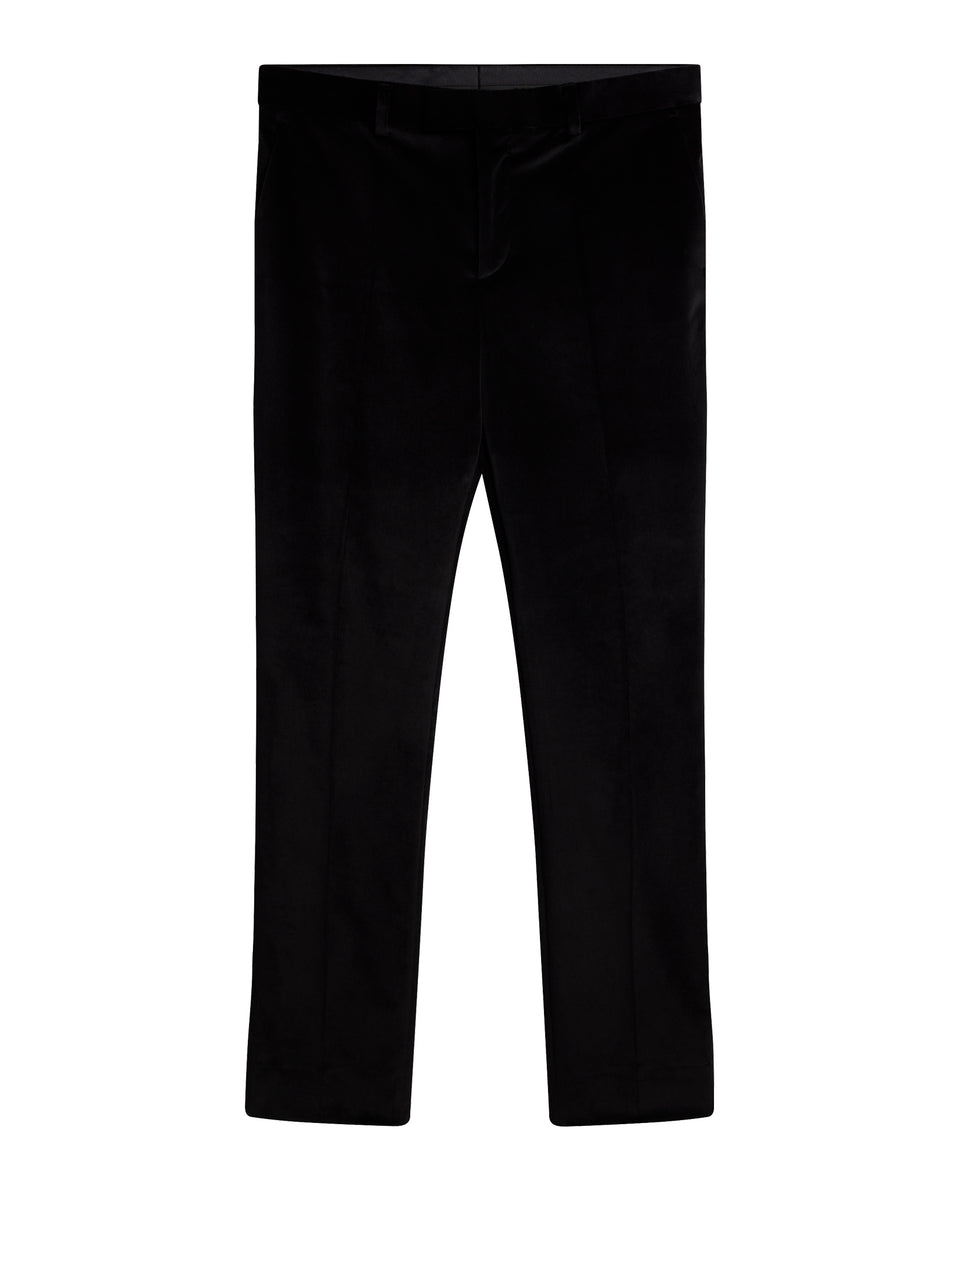 Xituodai 2022 Men's Loose Leisure Grey Formal Suit Pants Business Design  Cotton Western-style Trousers Male Black Casual Pants Size M-2XL